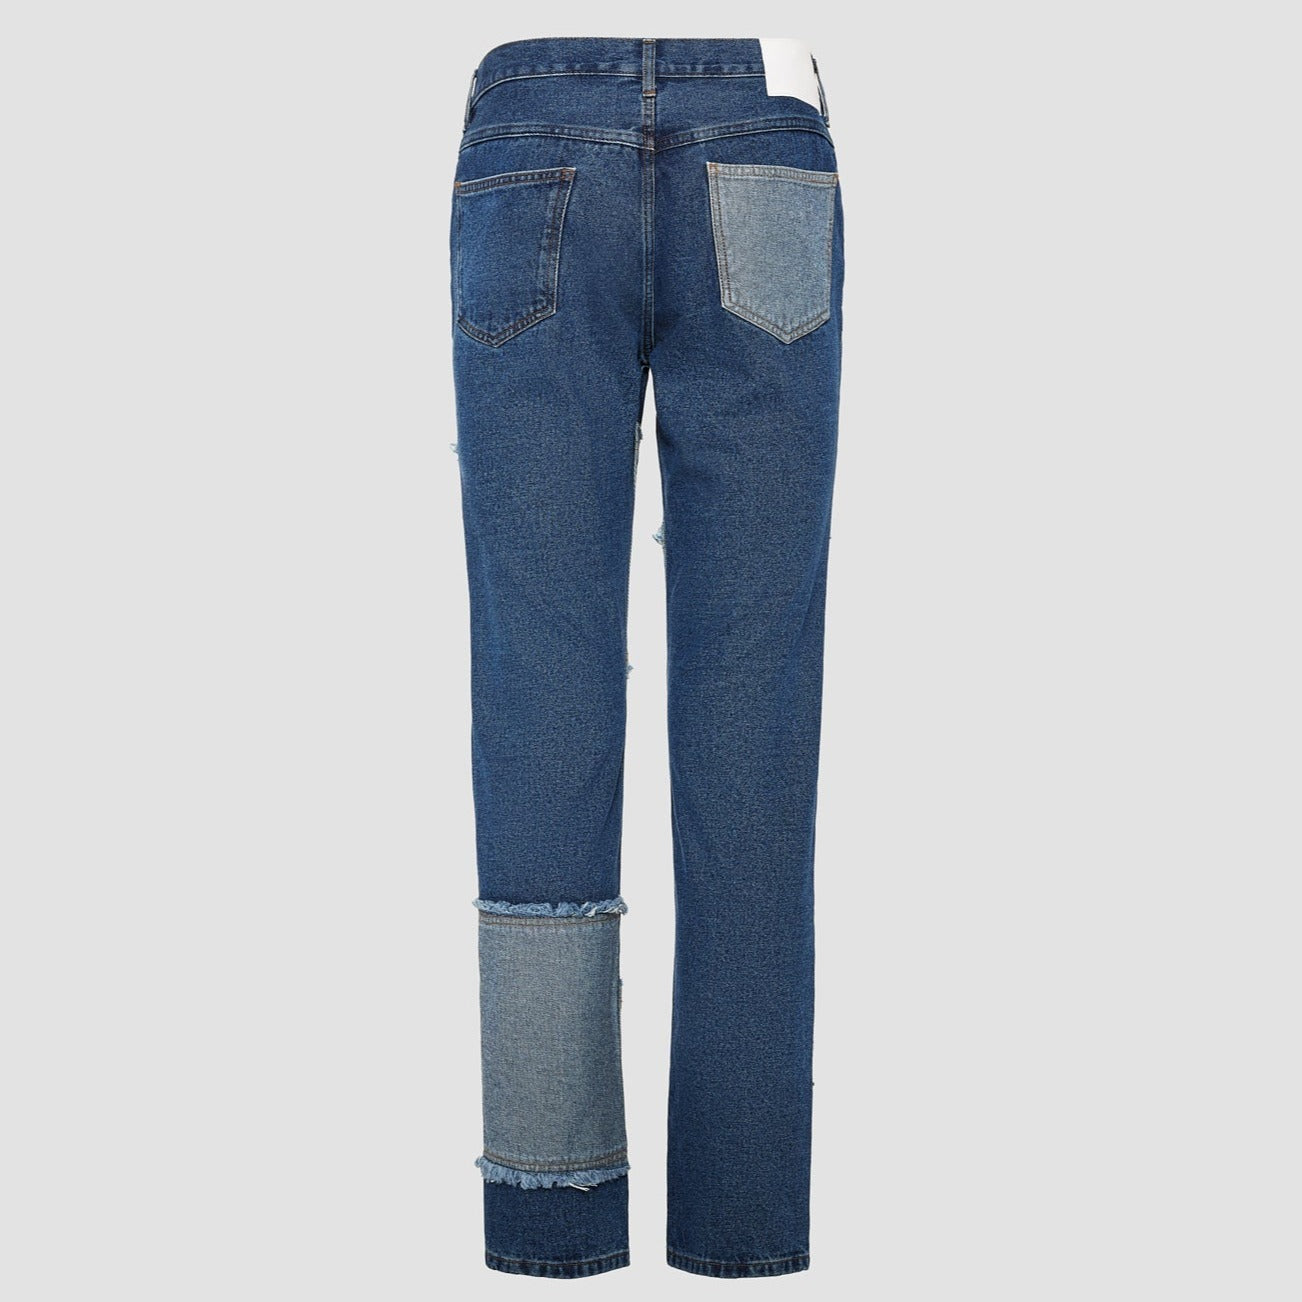 TPL ® Patchwork Denim Jeans - The Proper Label ®